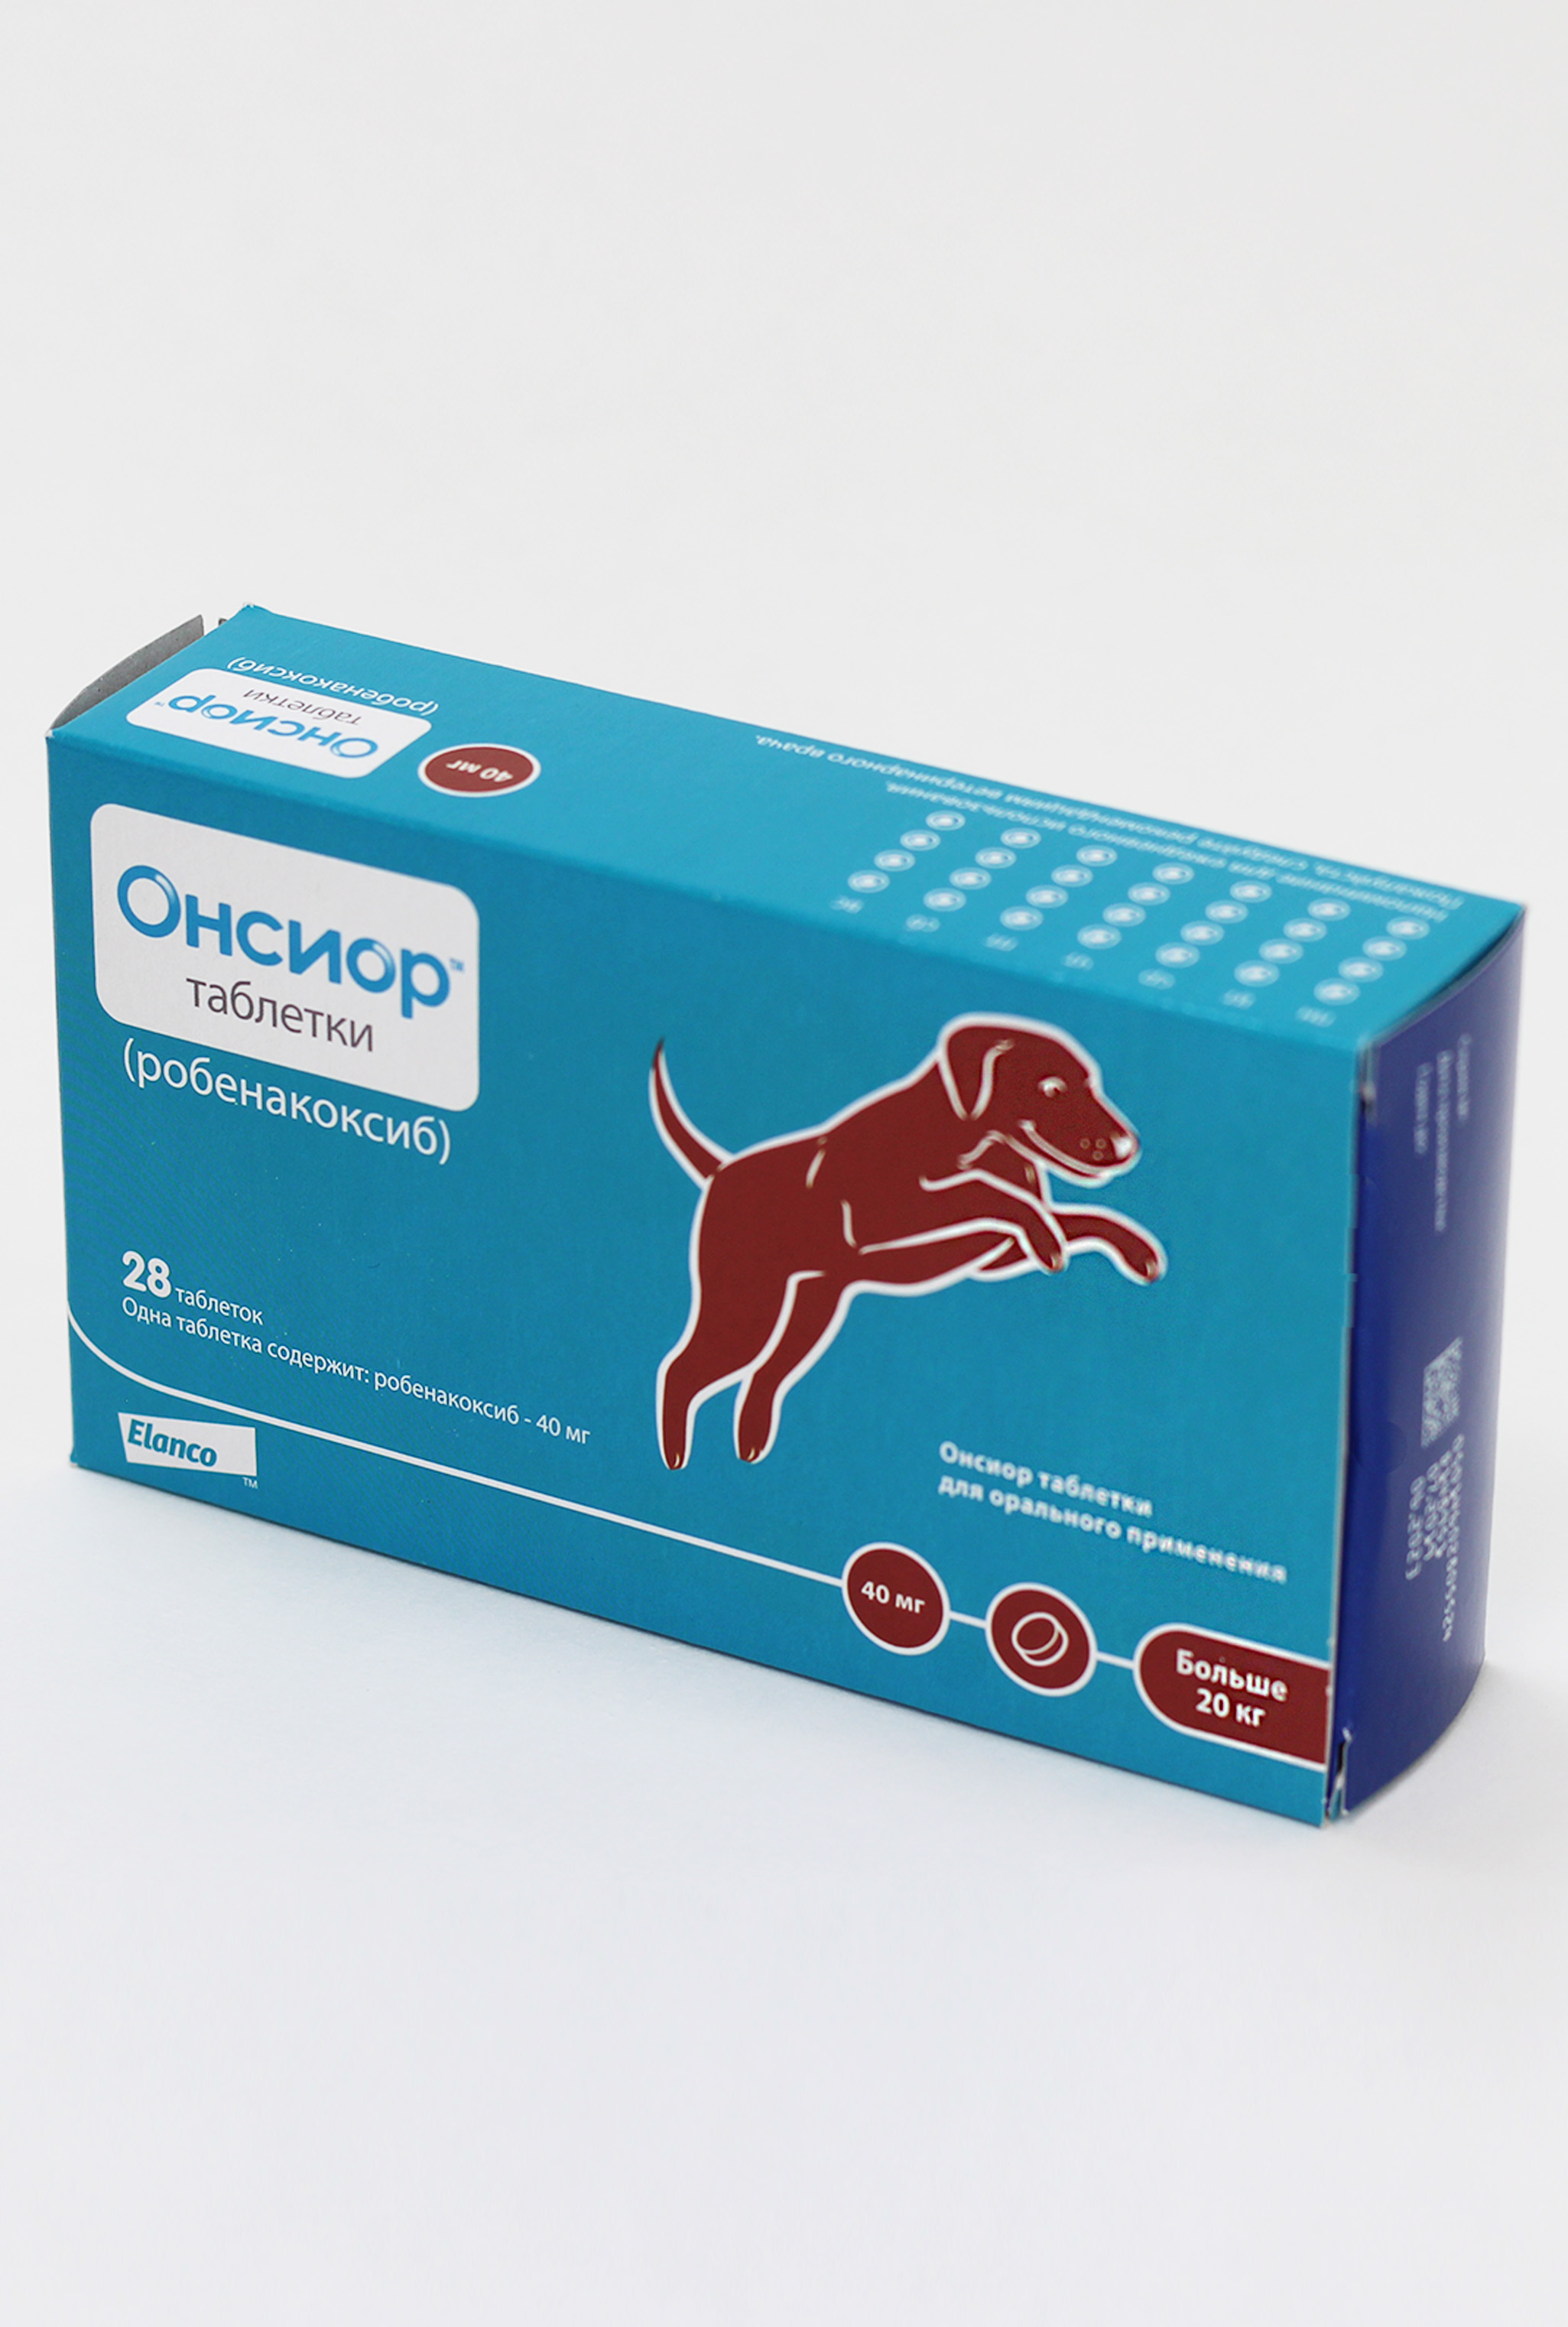 Elanco Онсиор для собак 1 таблетка 40 мг